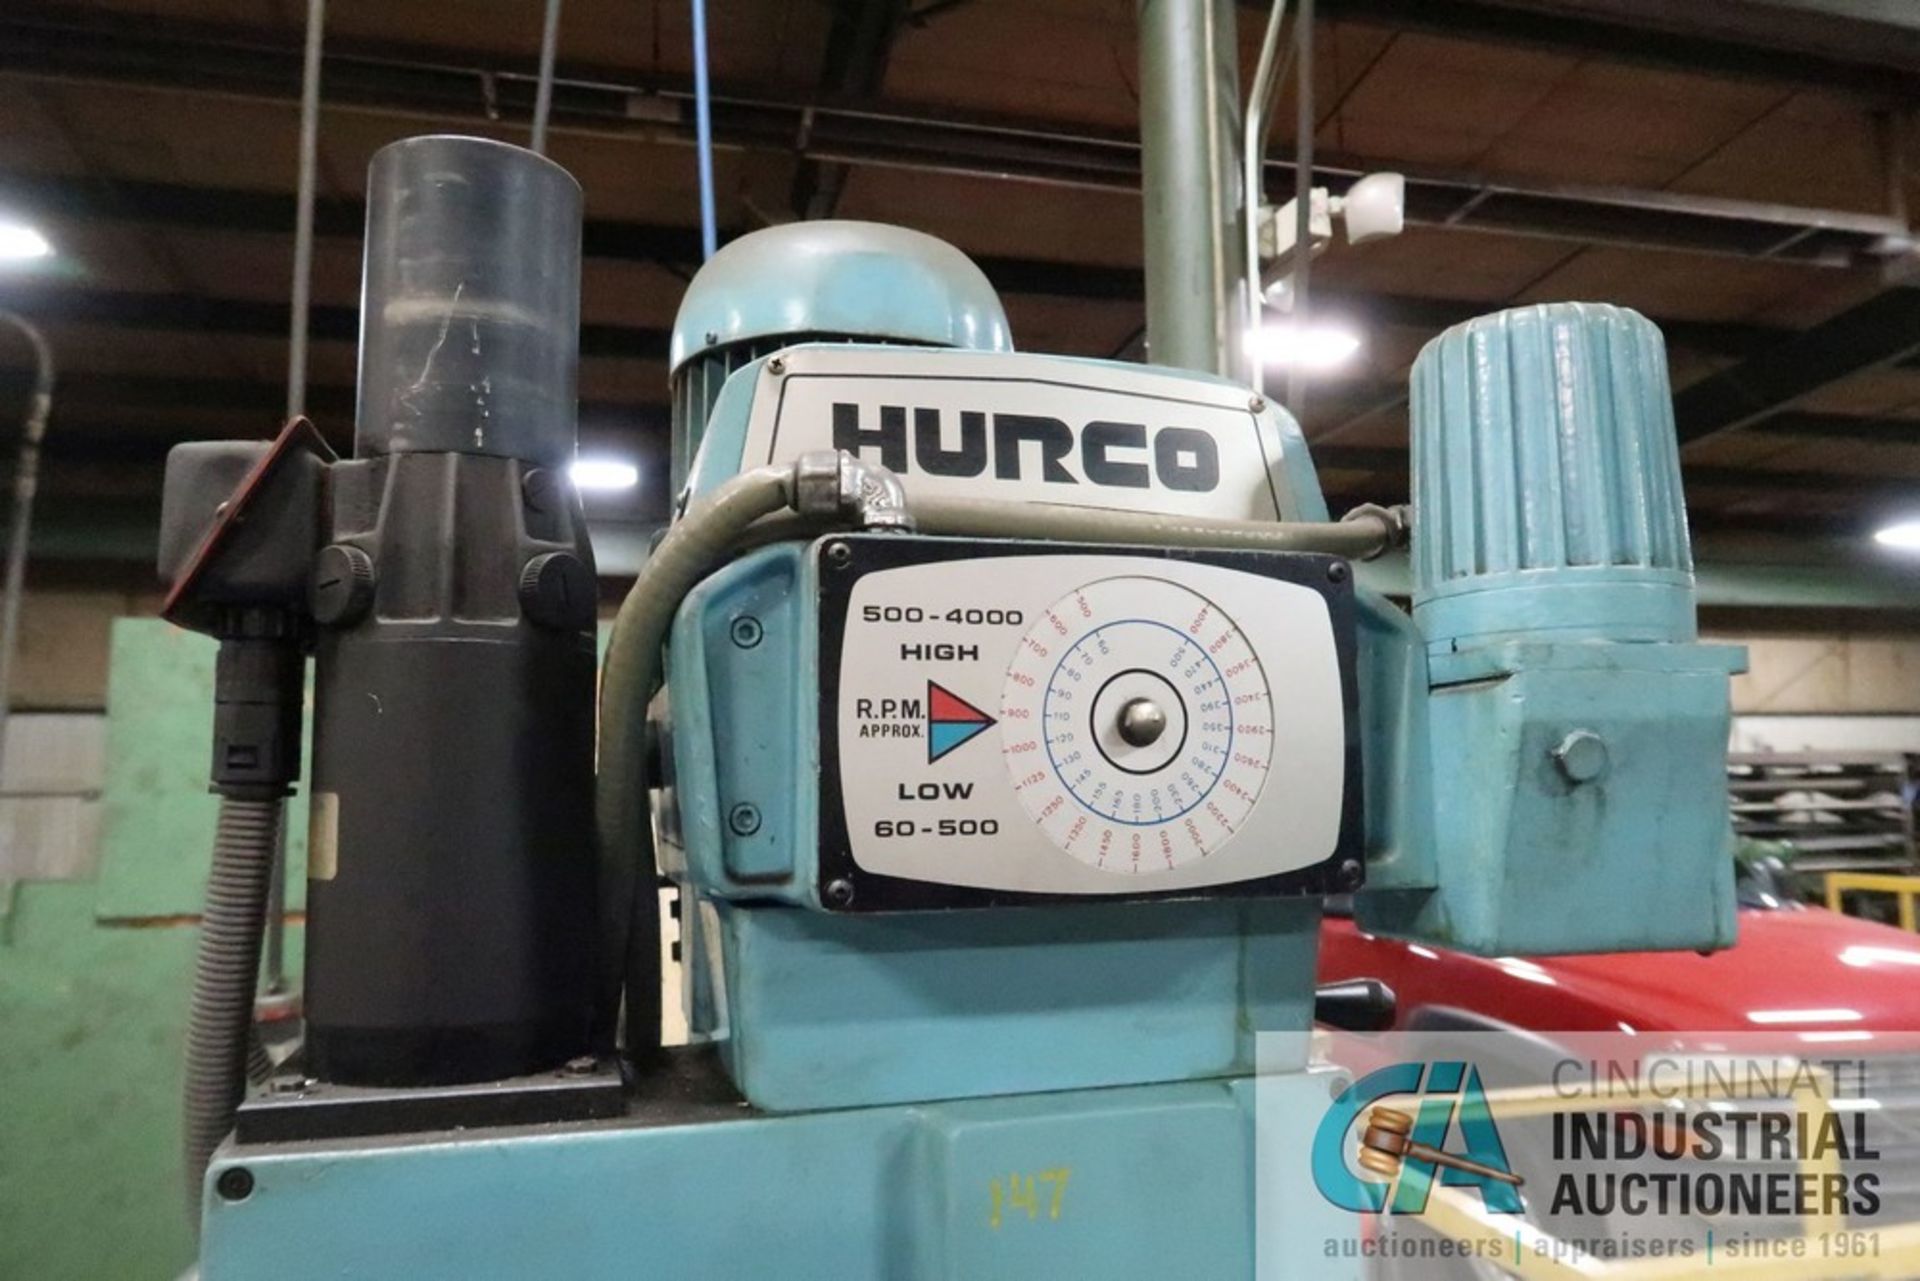 HURCO MODEL KM3P VERTICAL MILLING MACHINE; S/N DB-8003019E, 10" X 38" TABLE, 60-4,000 RPM, CONSOL - Image 4 of 10